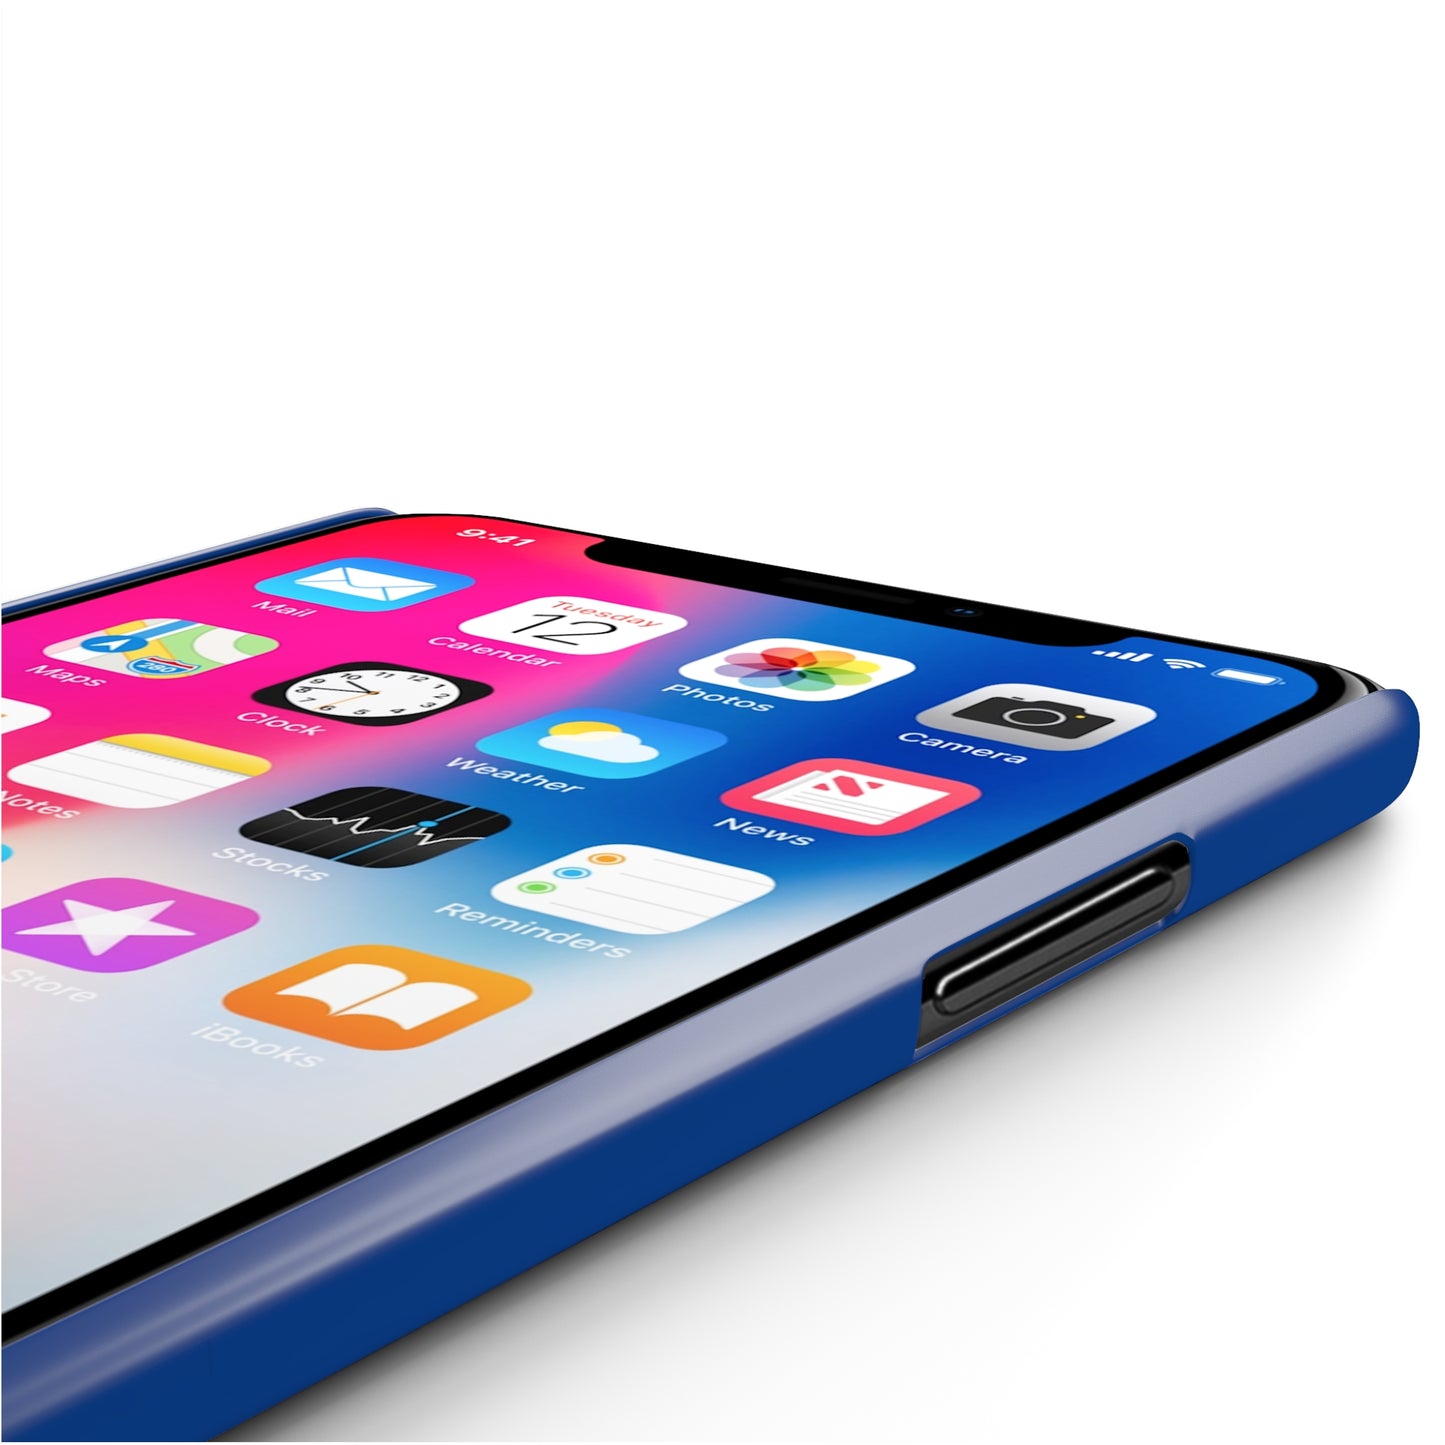 Dark Blue Visionary iPhone Case